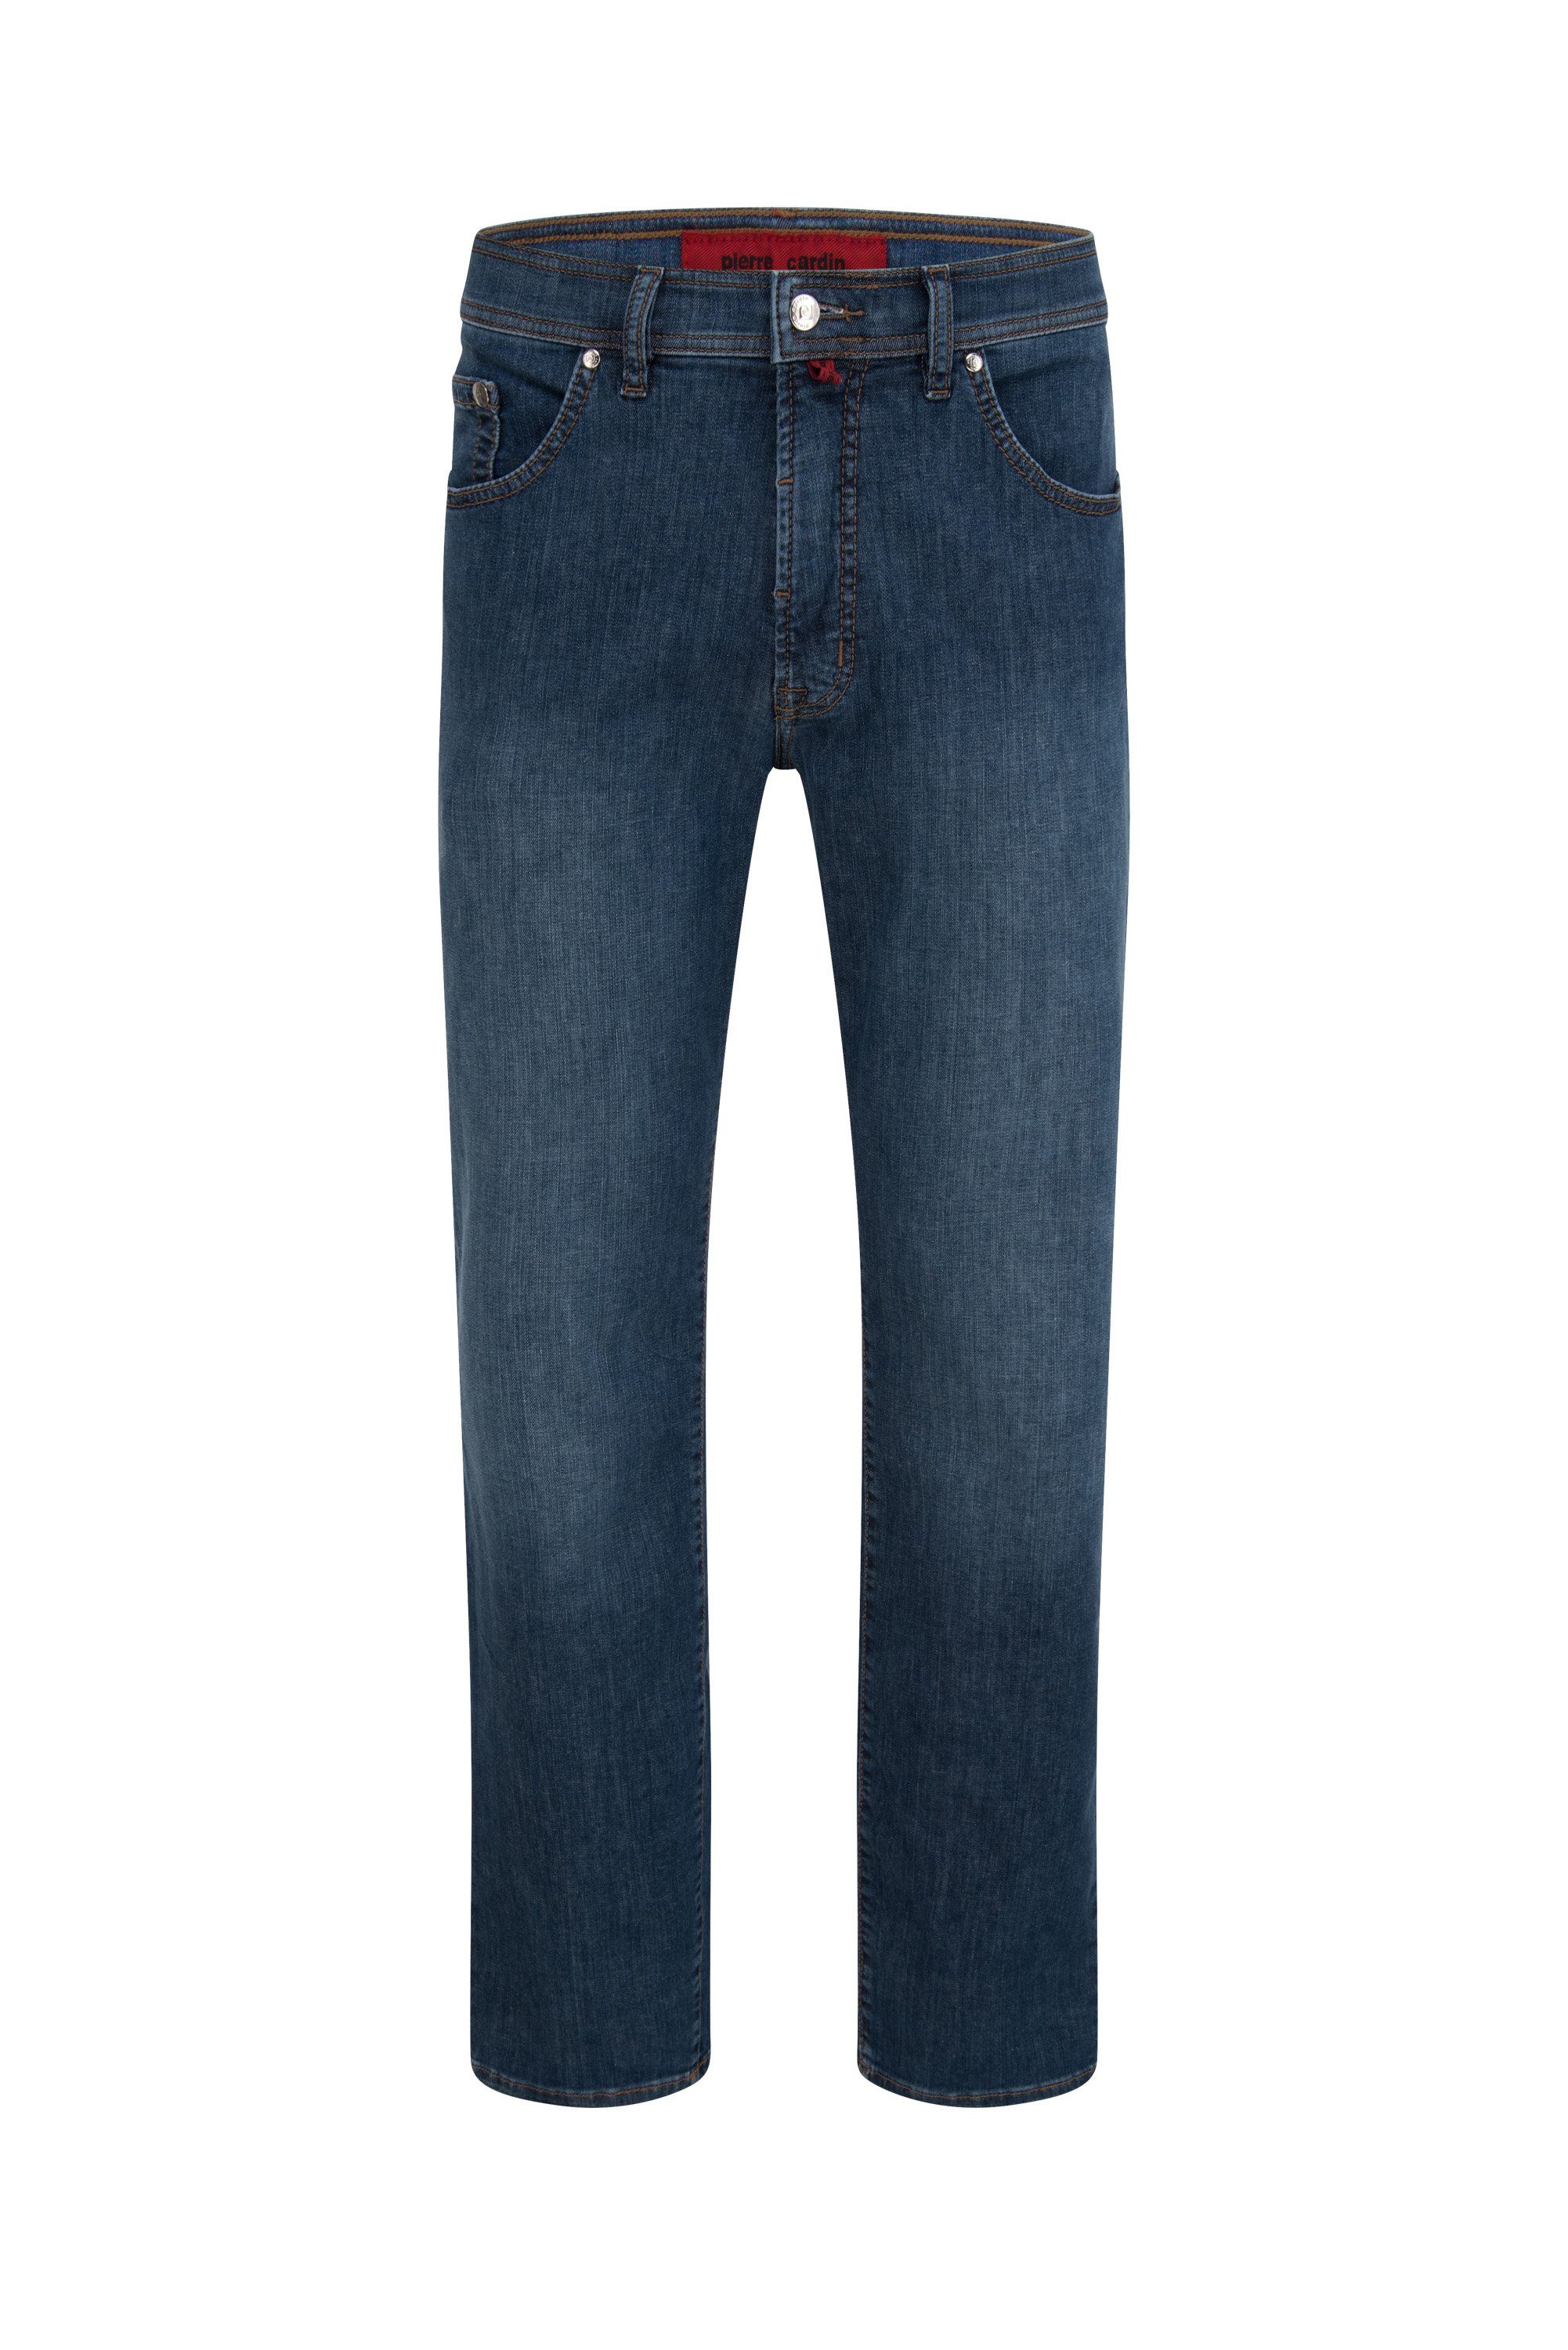 Pierre Cardin 5-Pocket-Jeans PIERRE CARDIN DIJON medium rinsed blue 3231 7011.13 - PREMIUM INDIGO